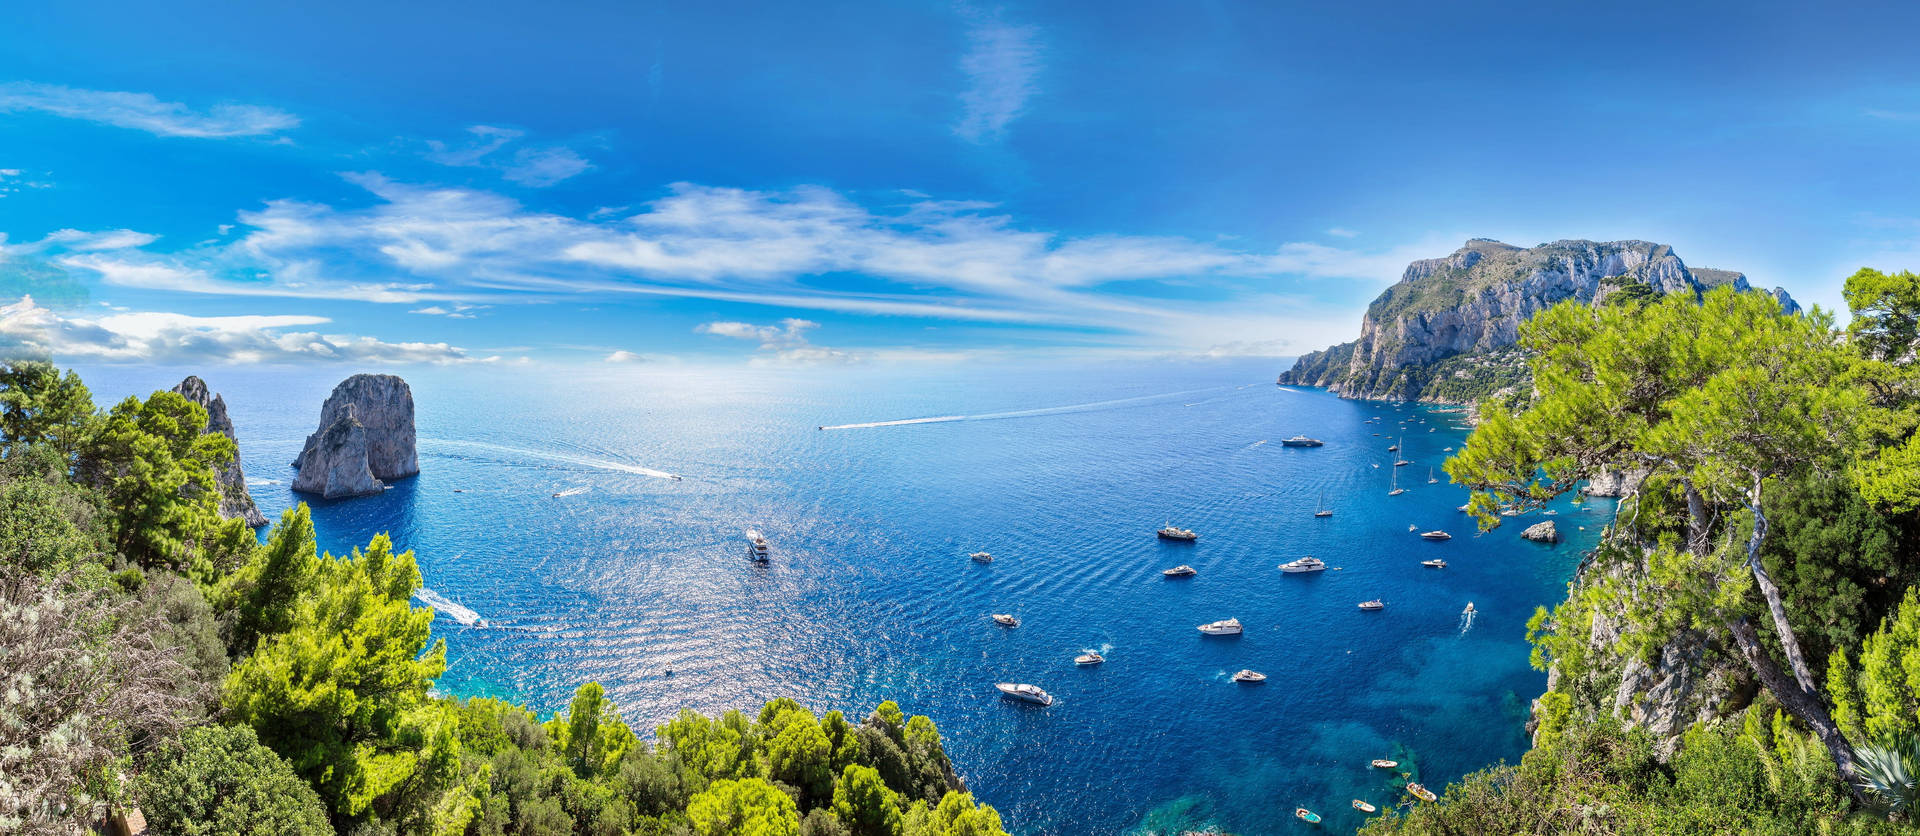 Capri Island Background